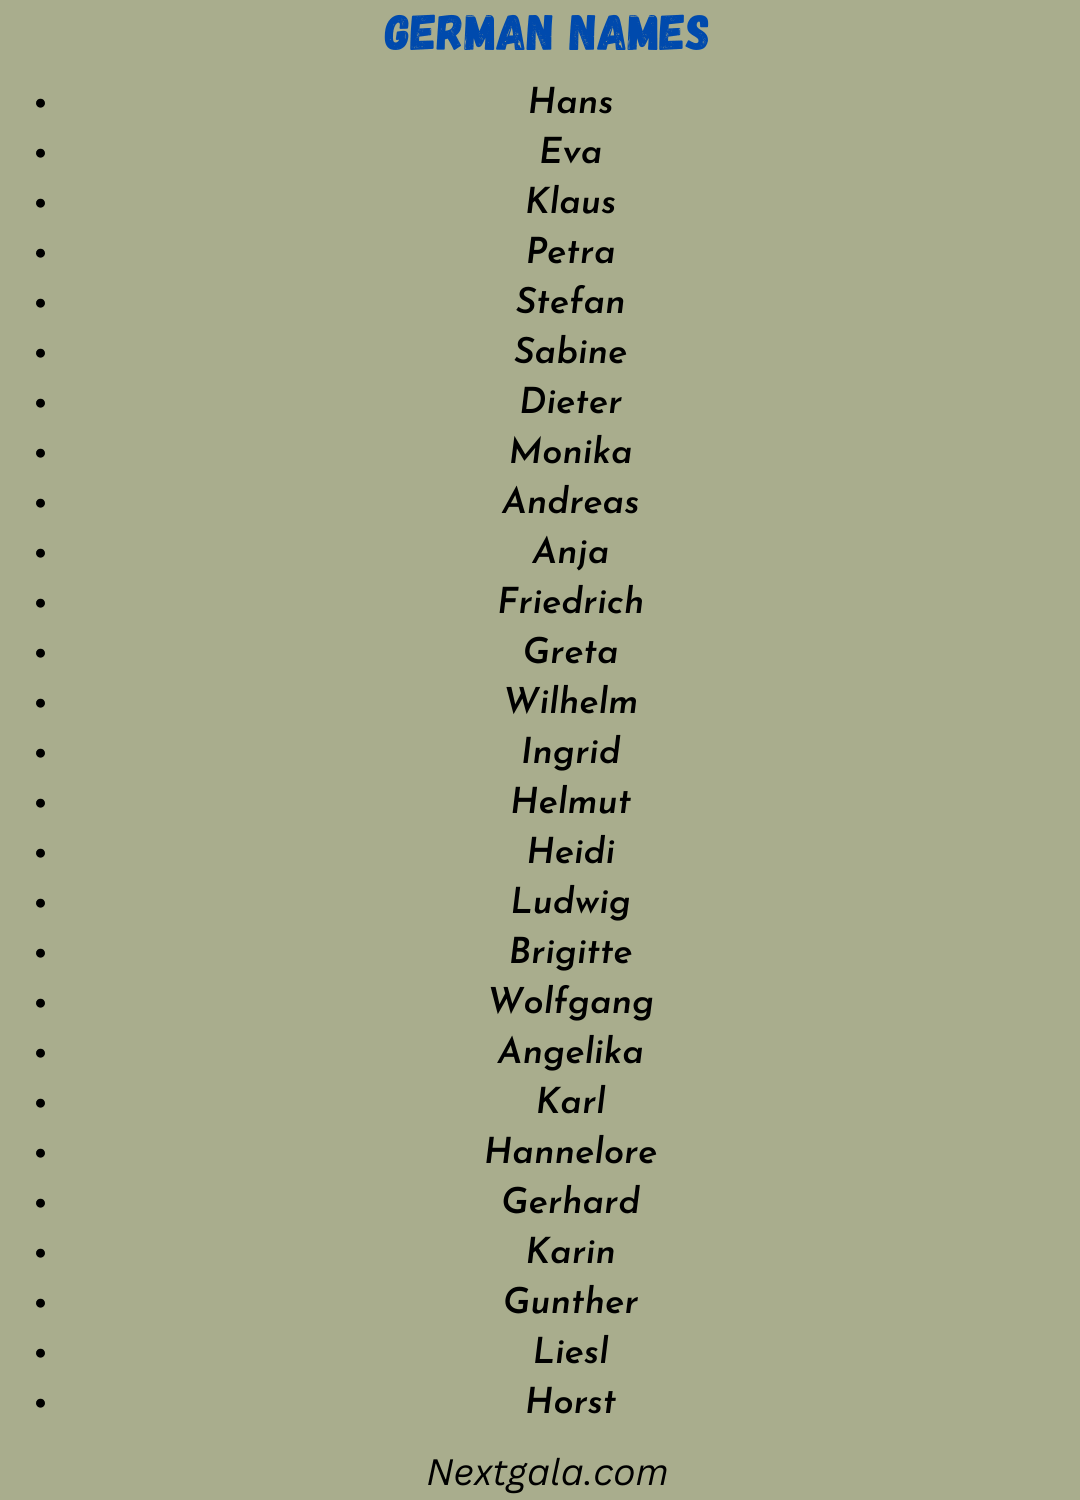 German Names